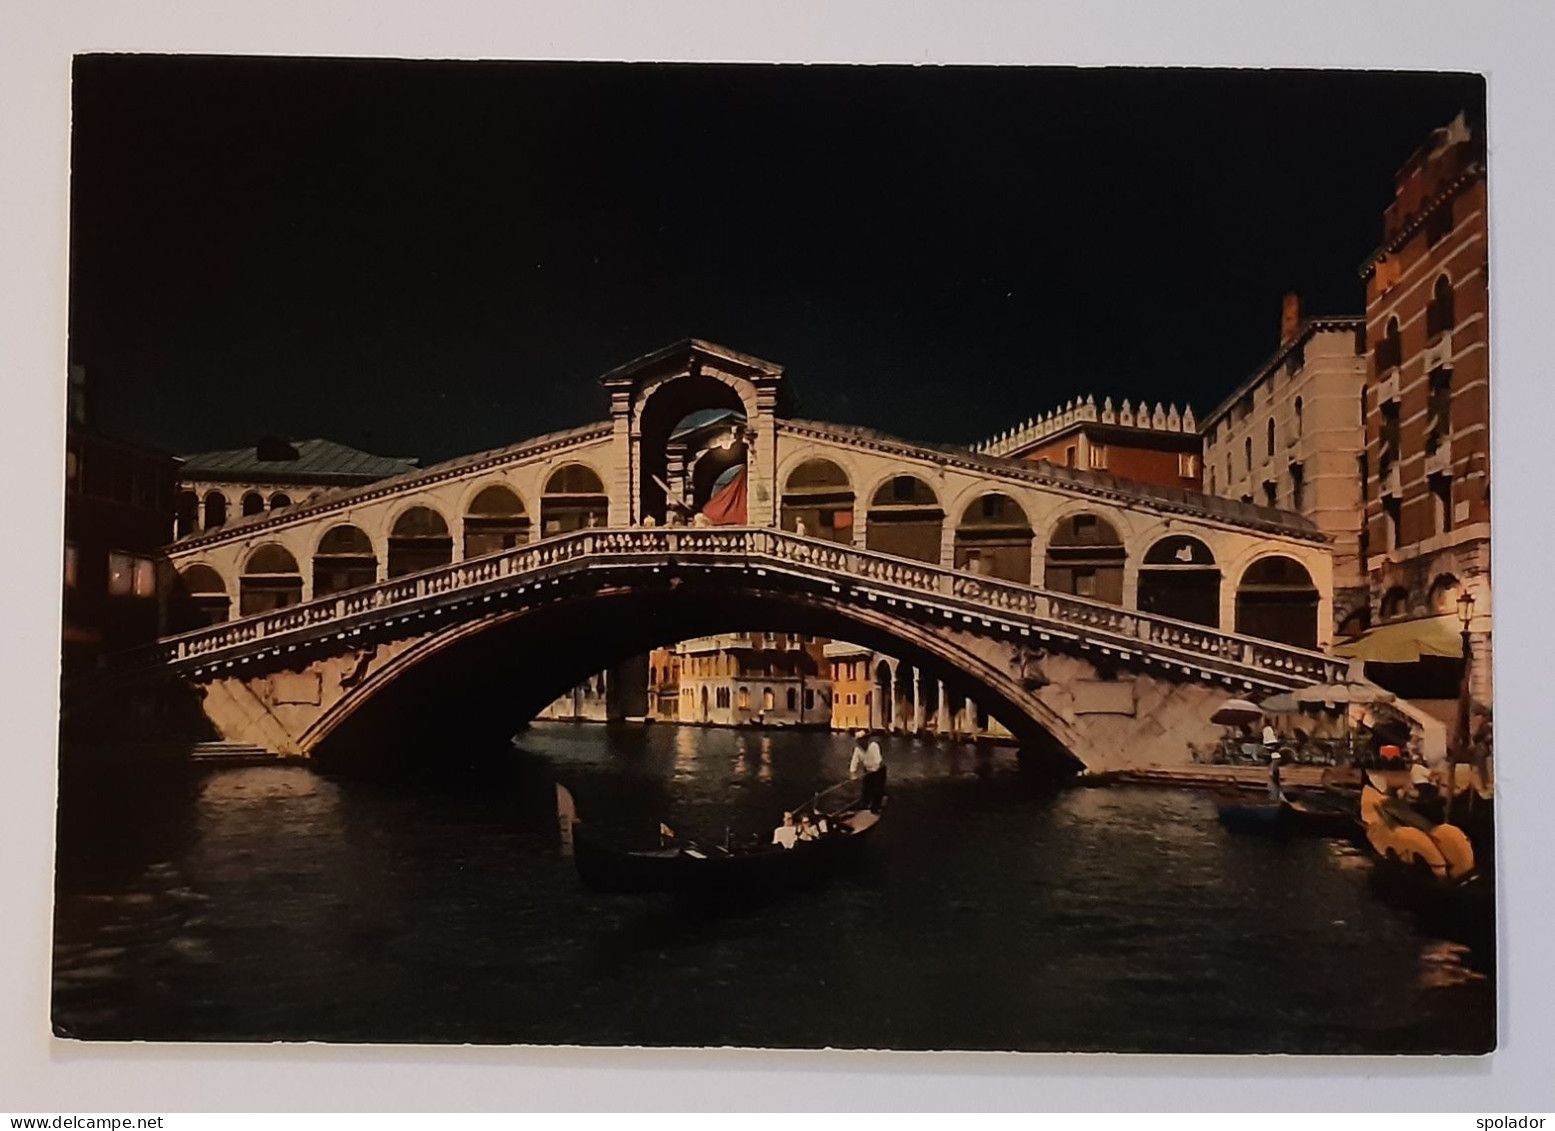 VENEZIA-Italy-Rialto By Night-Vintage Photo Postcard-unused-70s - Venezia (Venice)